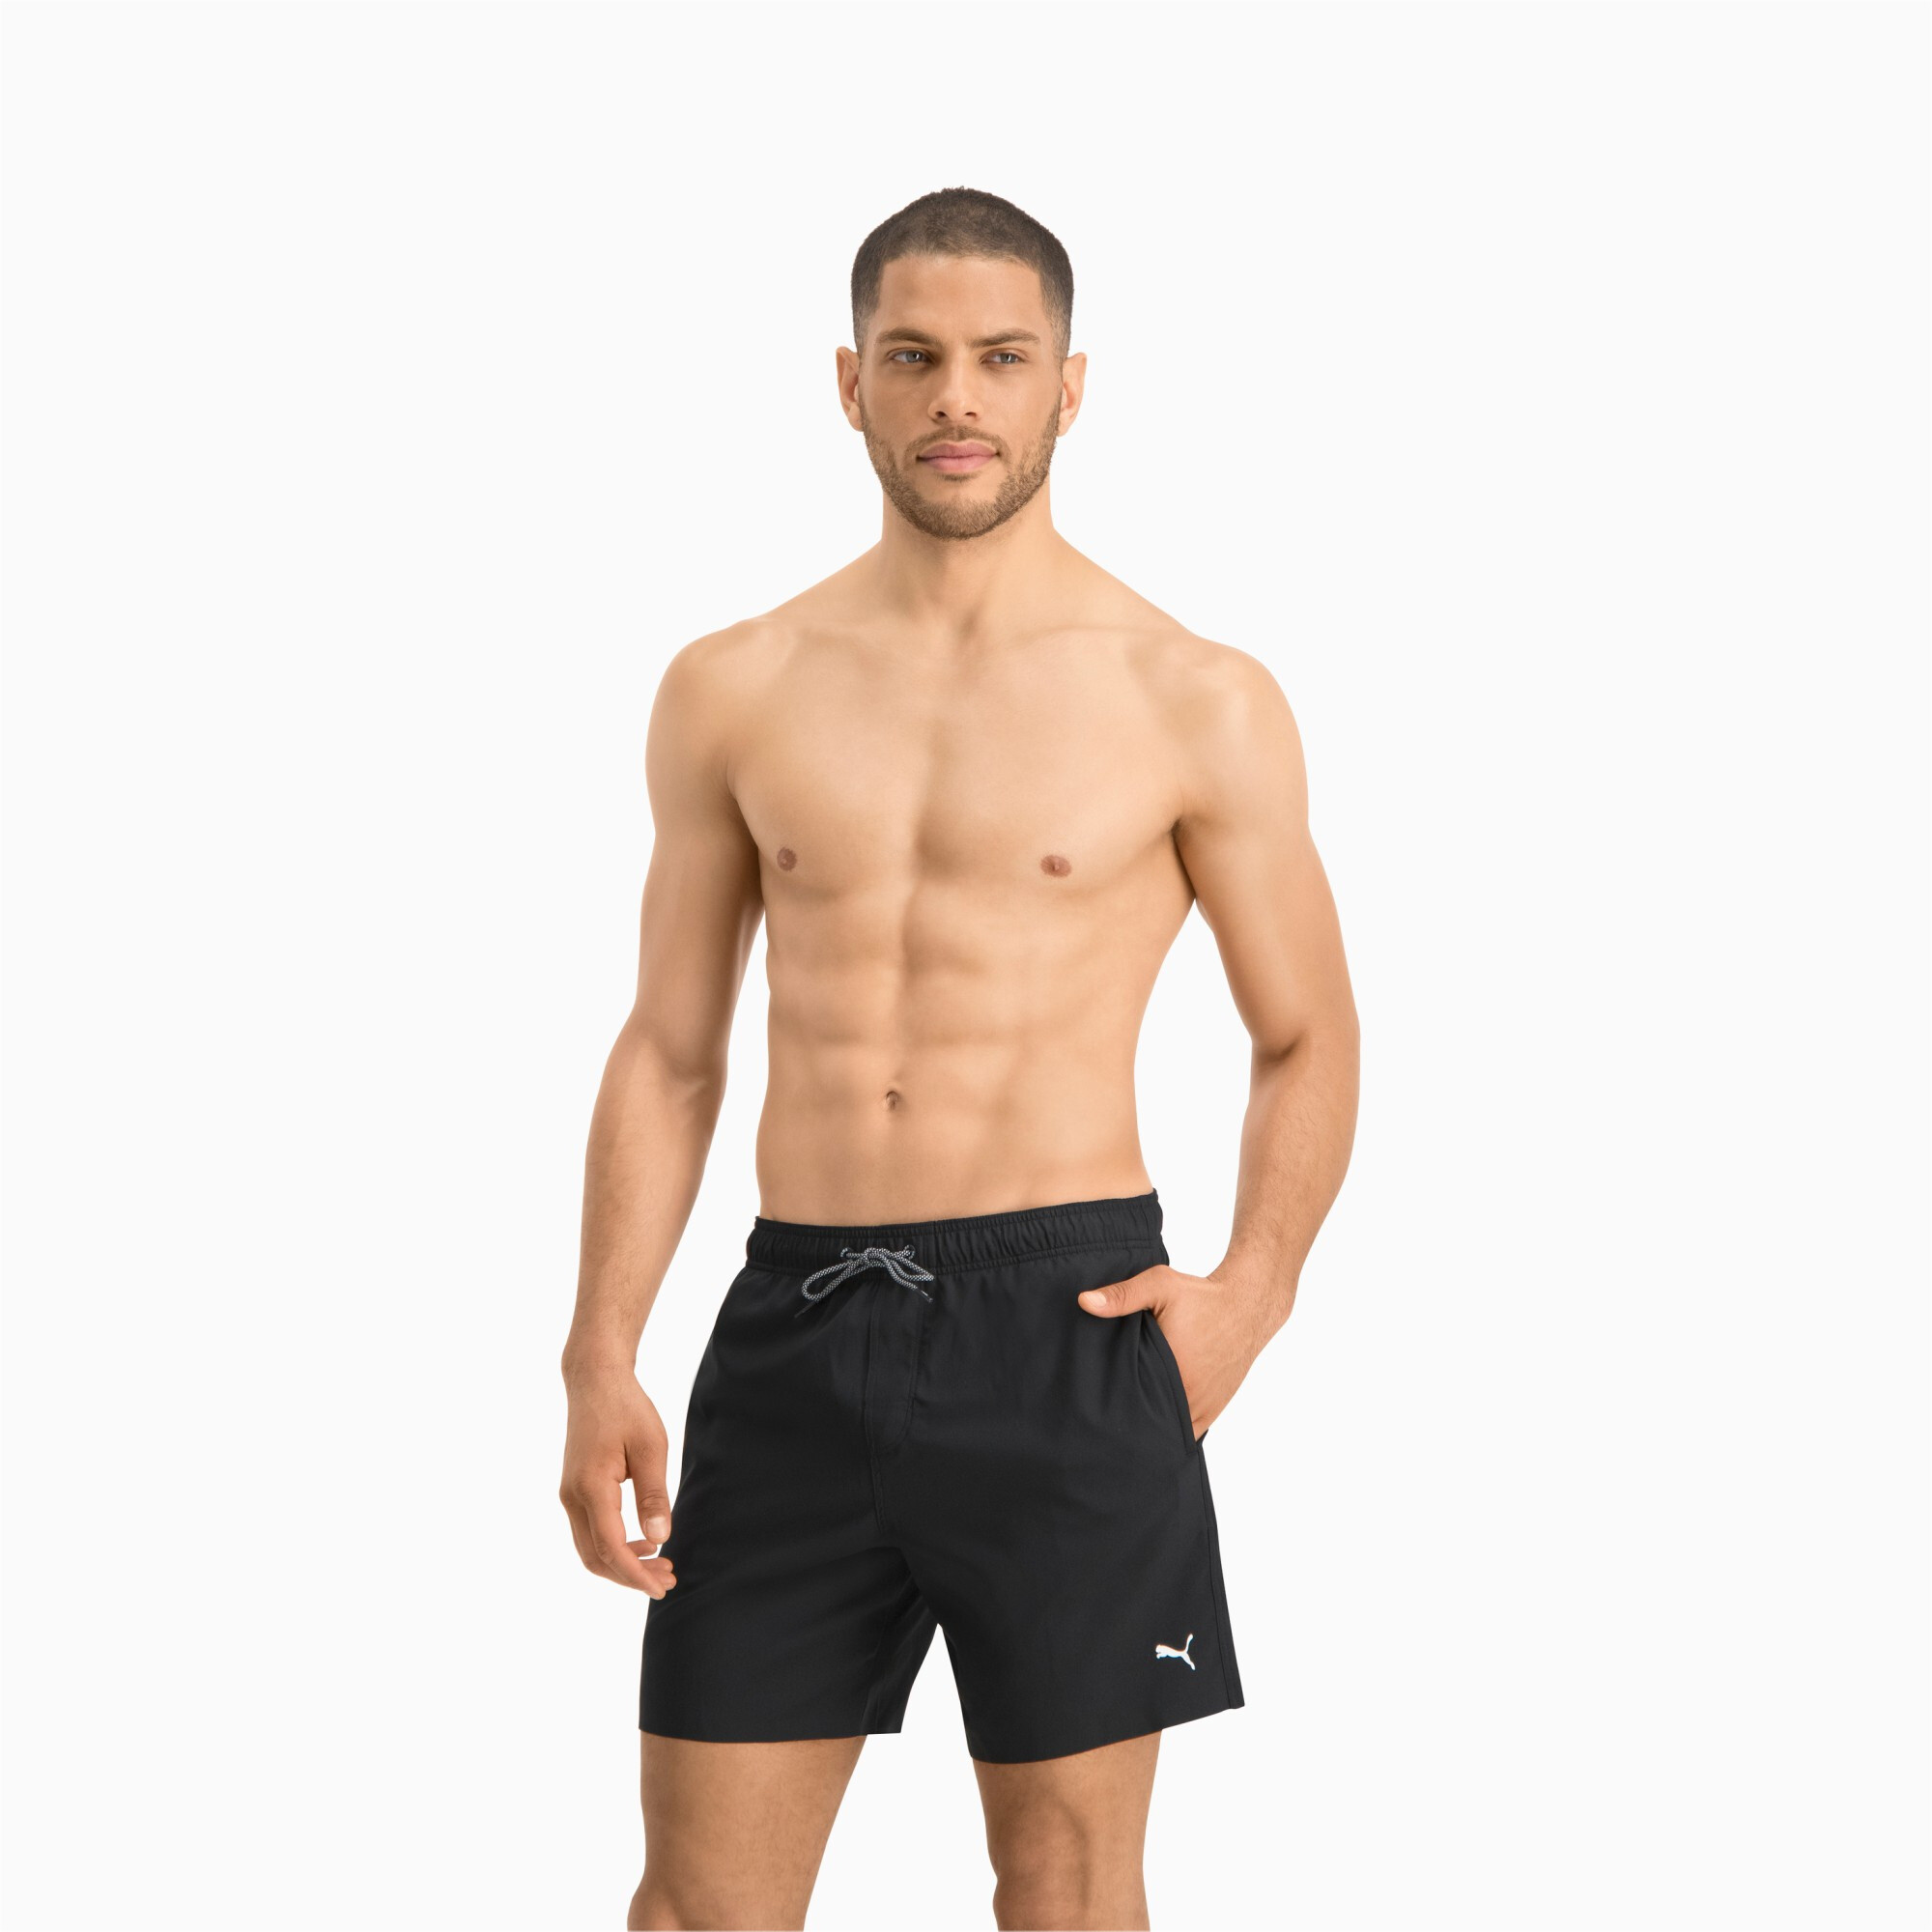 Men's PUMA Swim Mid-Length Swimming Shorts In Black, Size Large